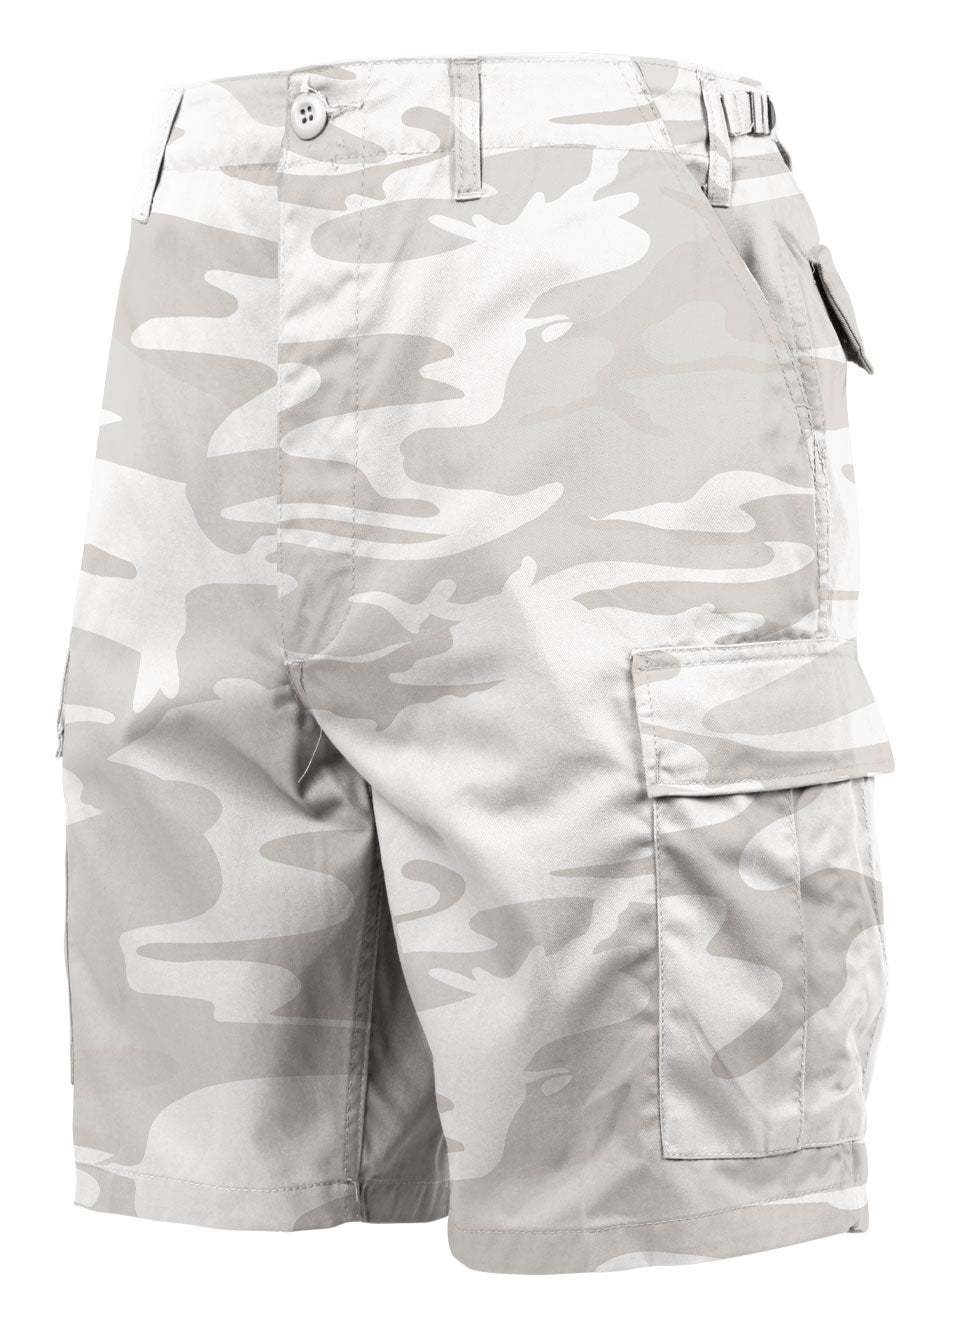 Rothco Men's White Camo BDU Shorts